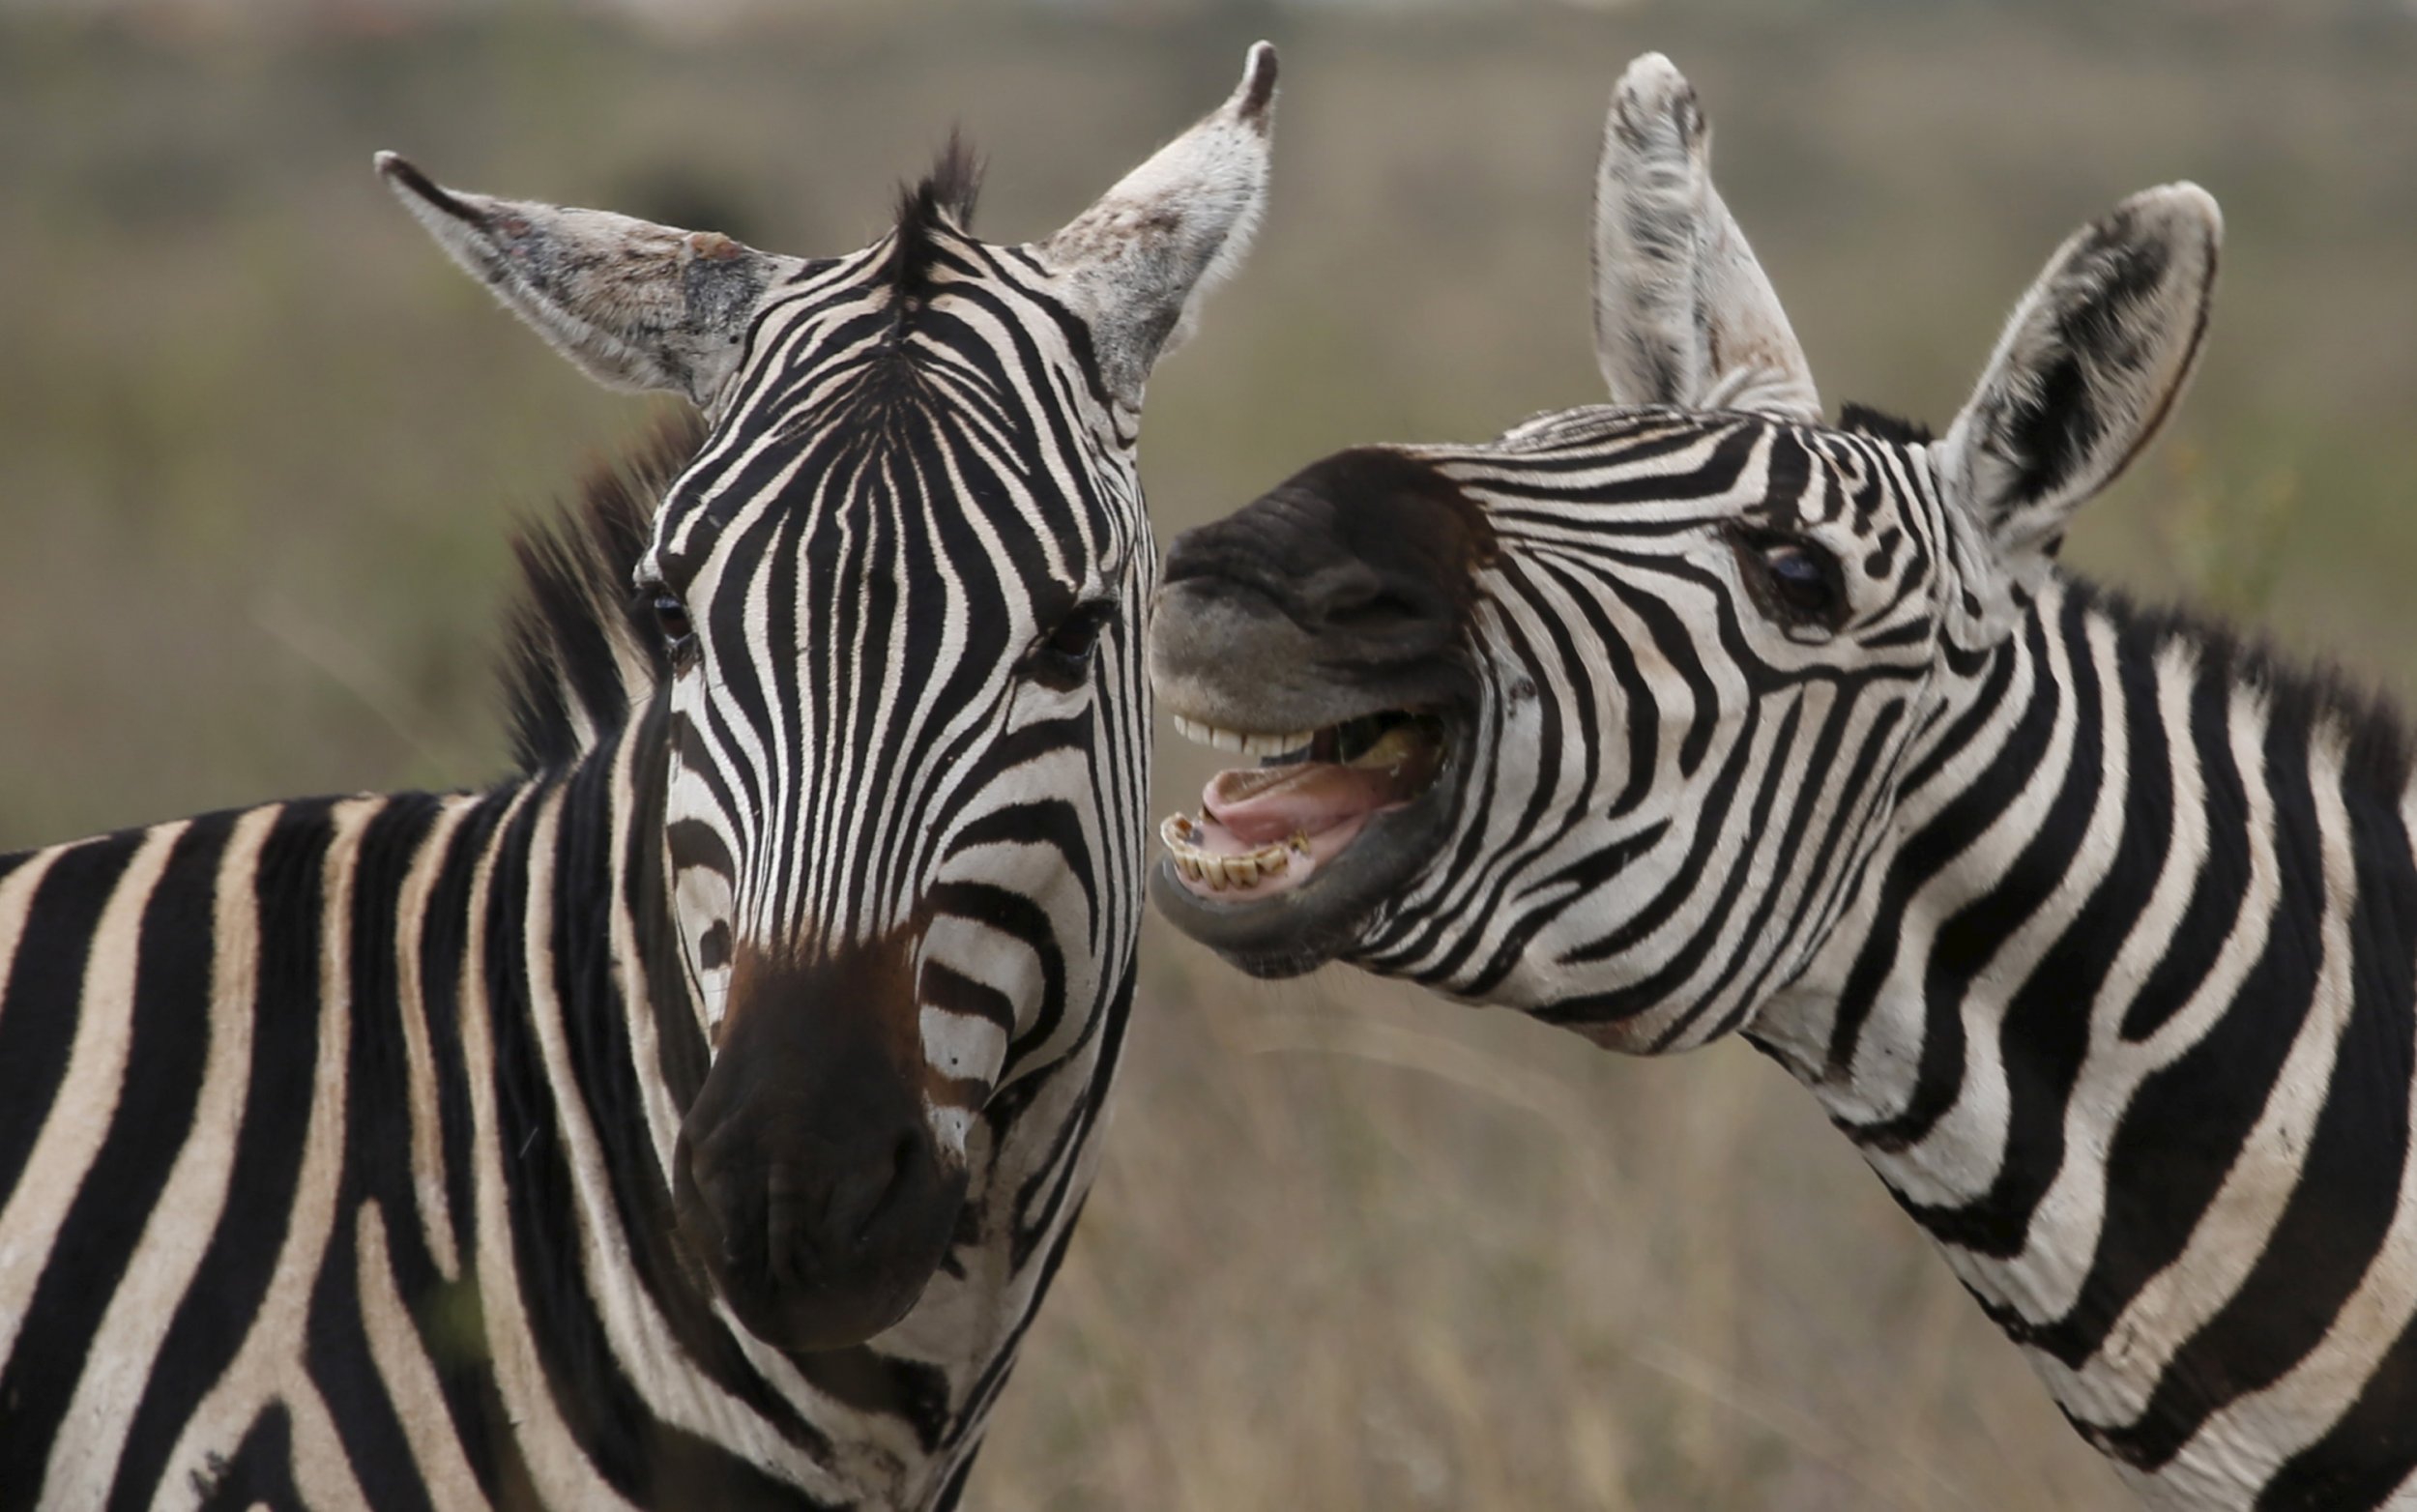 Zebra Stripes Aren't Camouflage and Don't Deter Predators